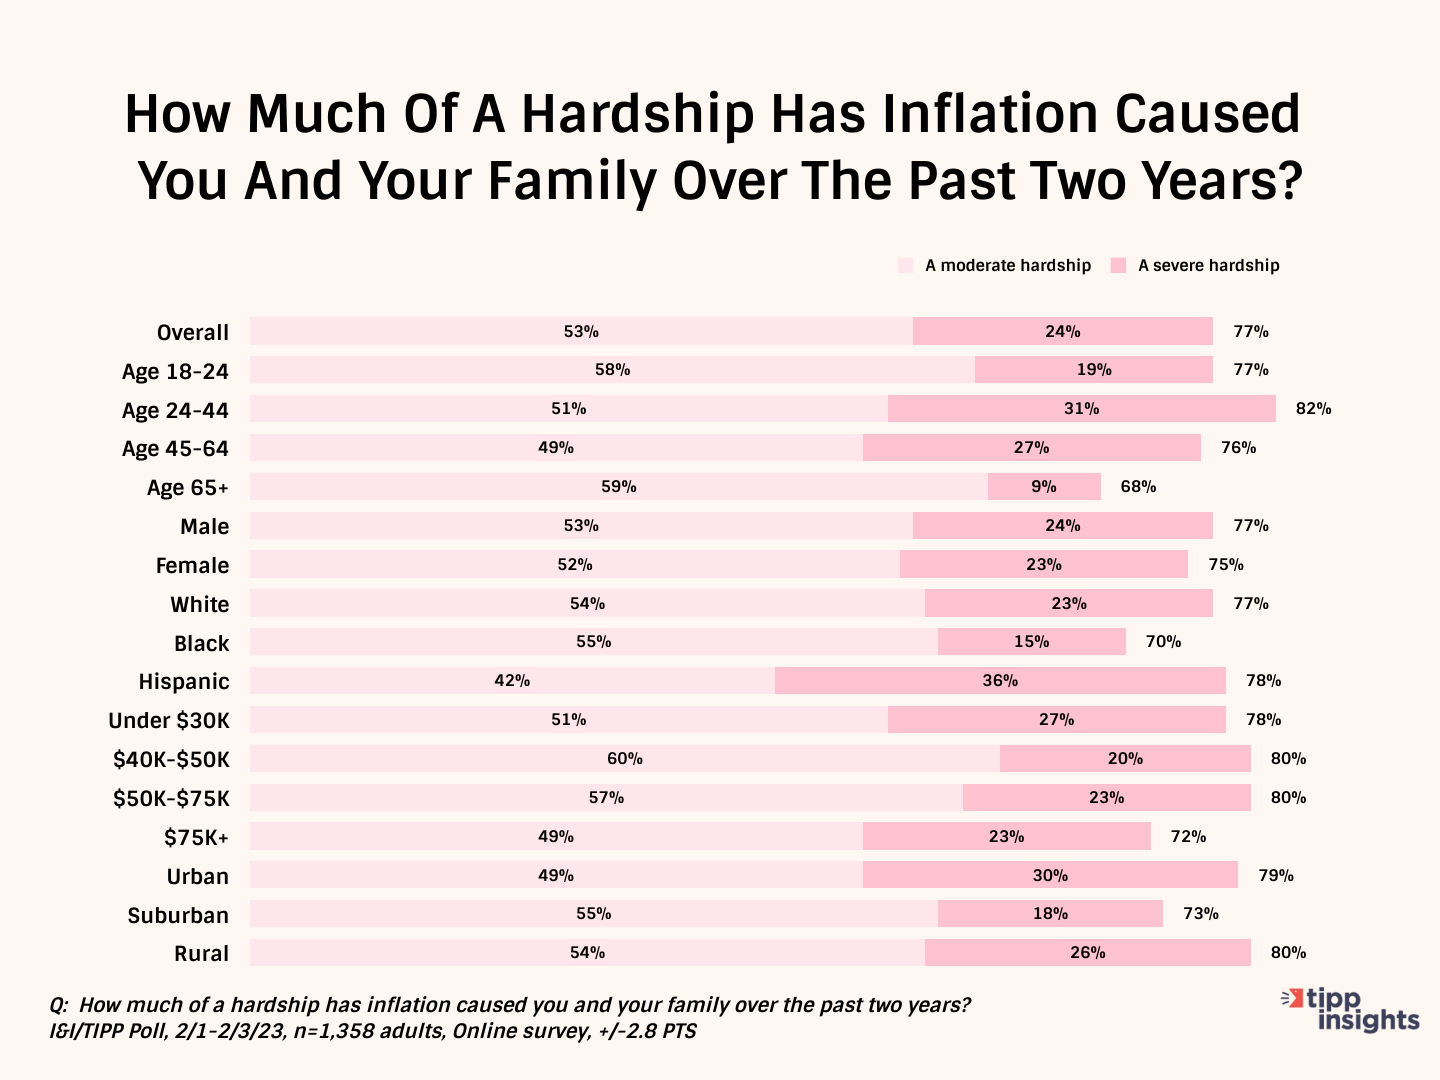 Three-Quarters Report Suffering ‘Hardship’ From Bidenflation: I&I/TIPP Poll